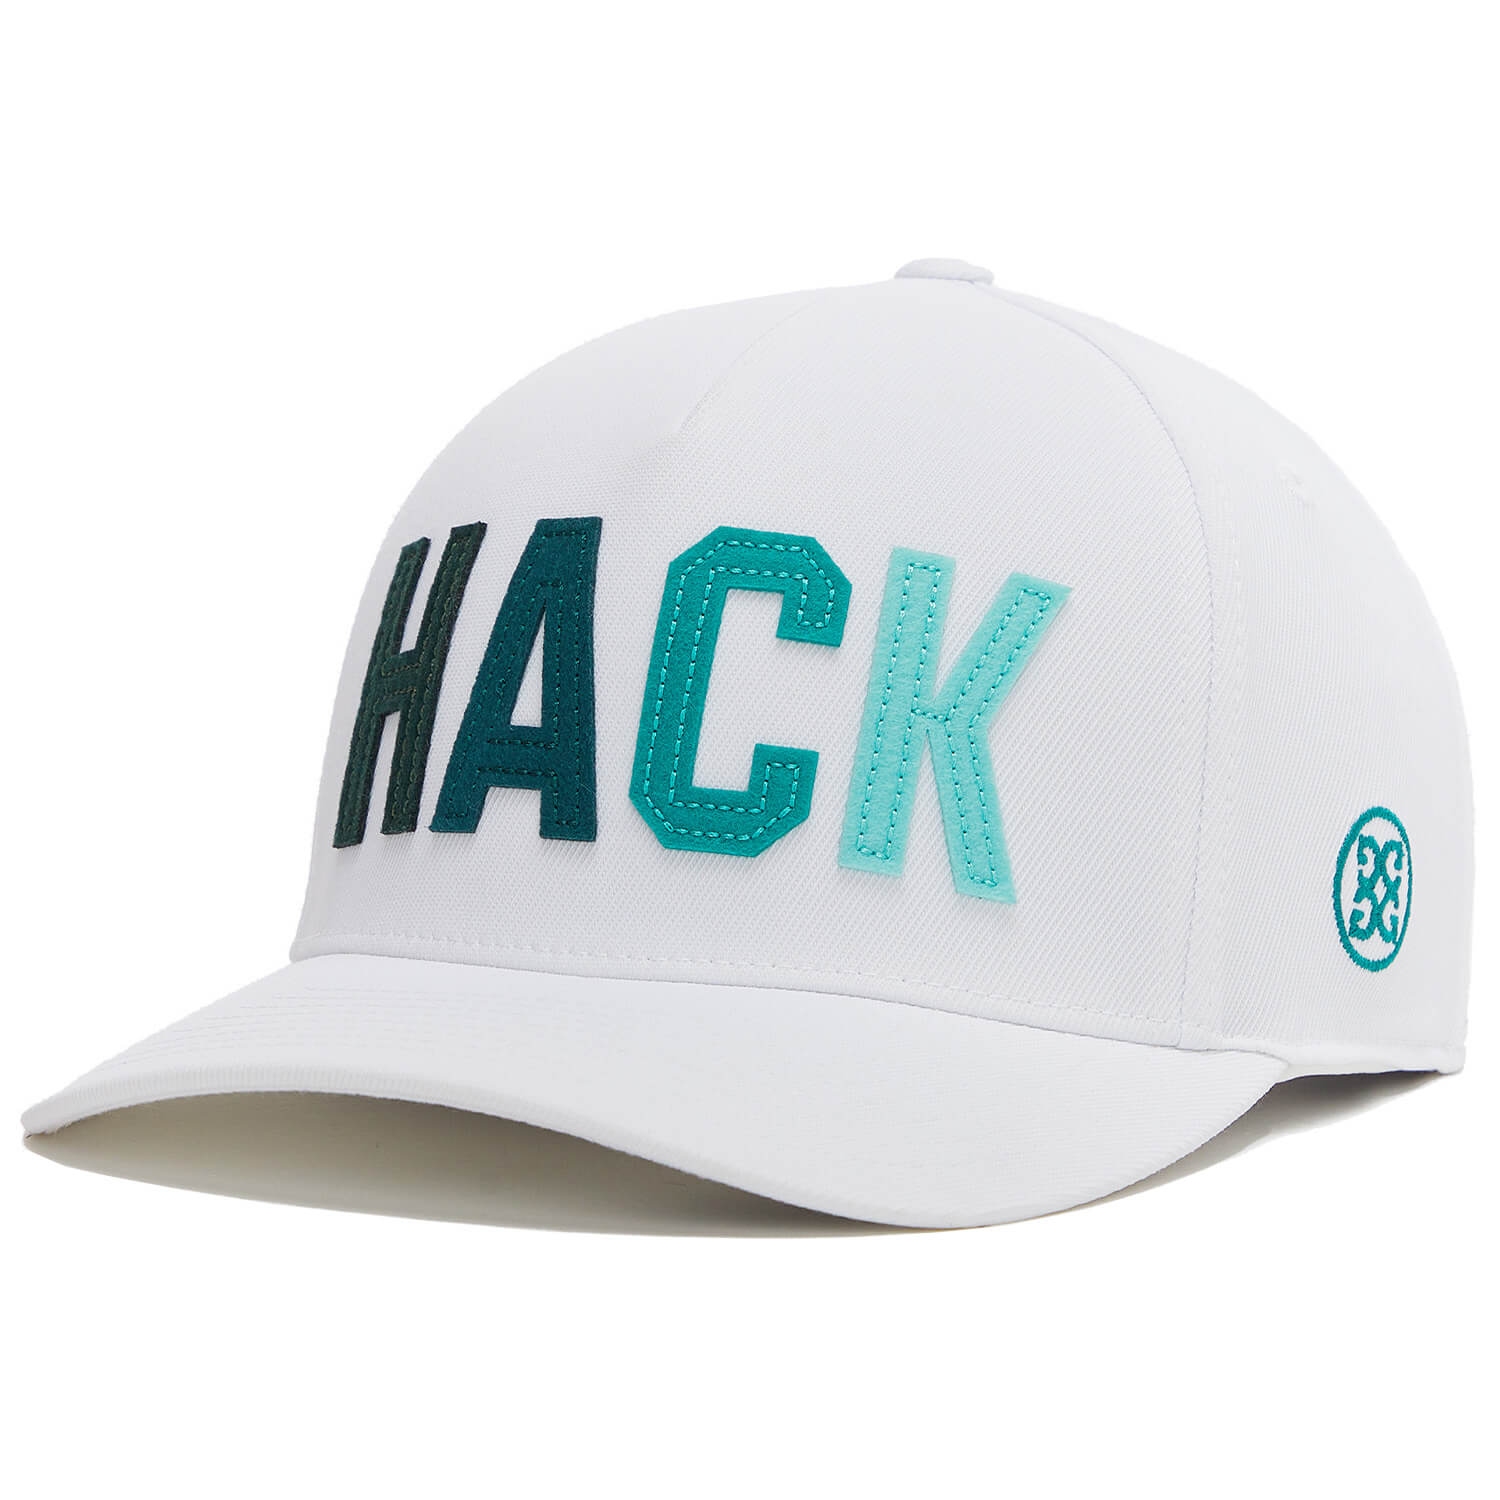 G/FORE Hack Snapback Cap